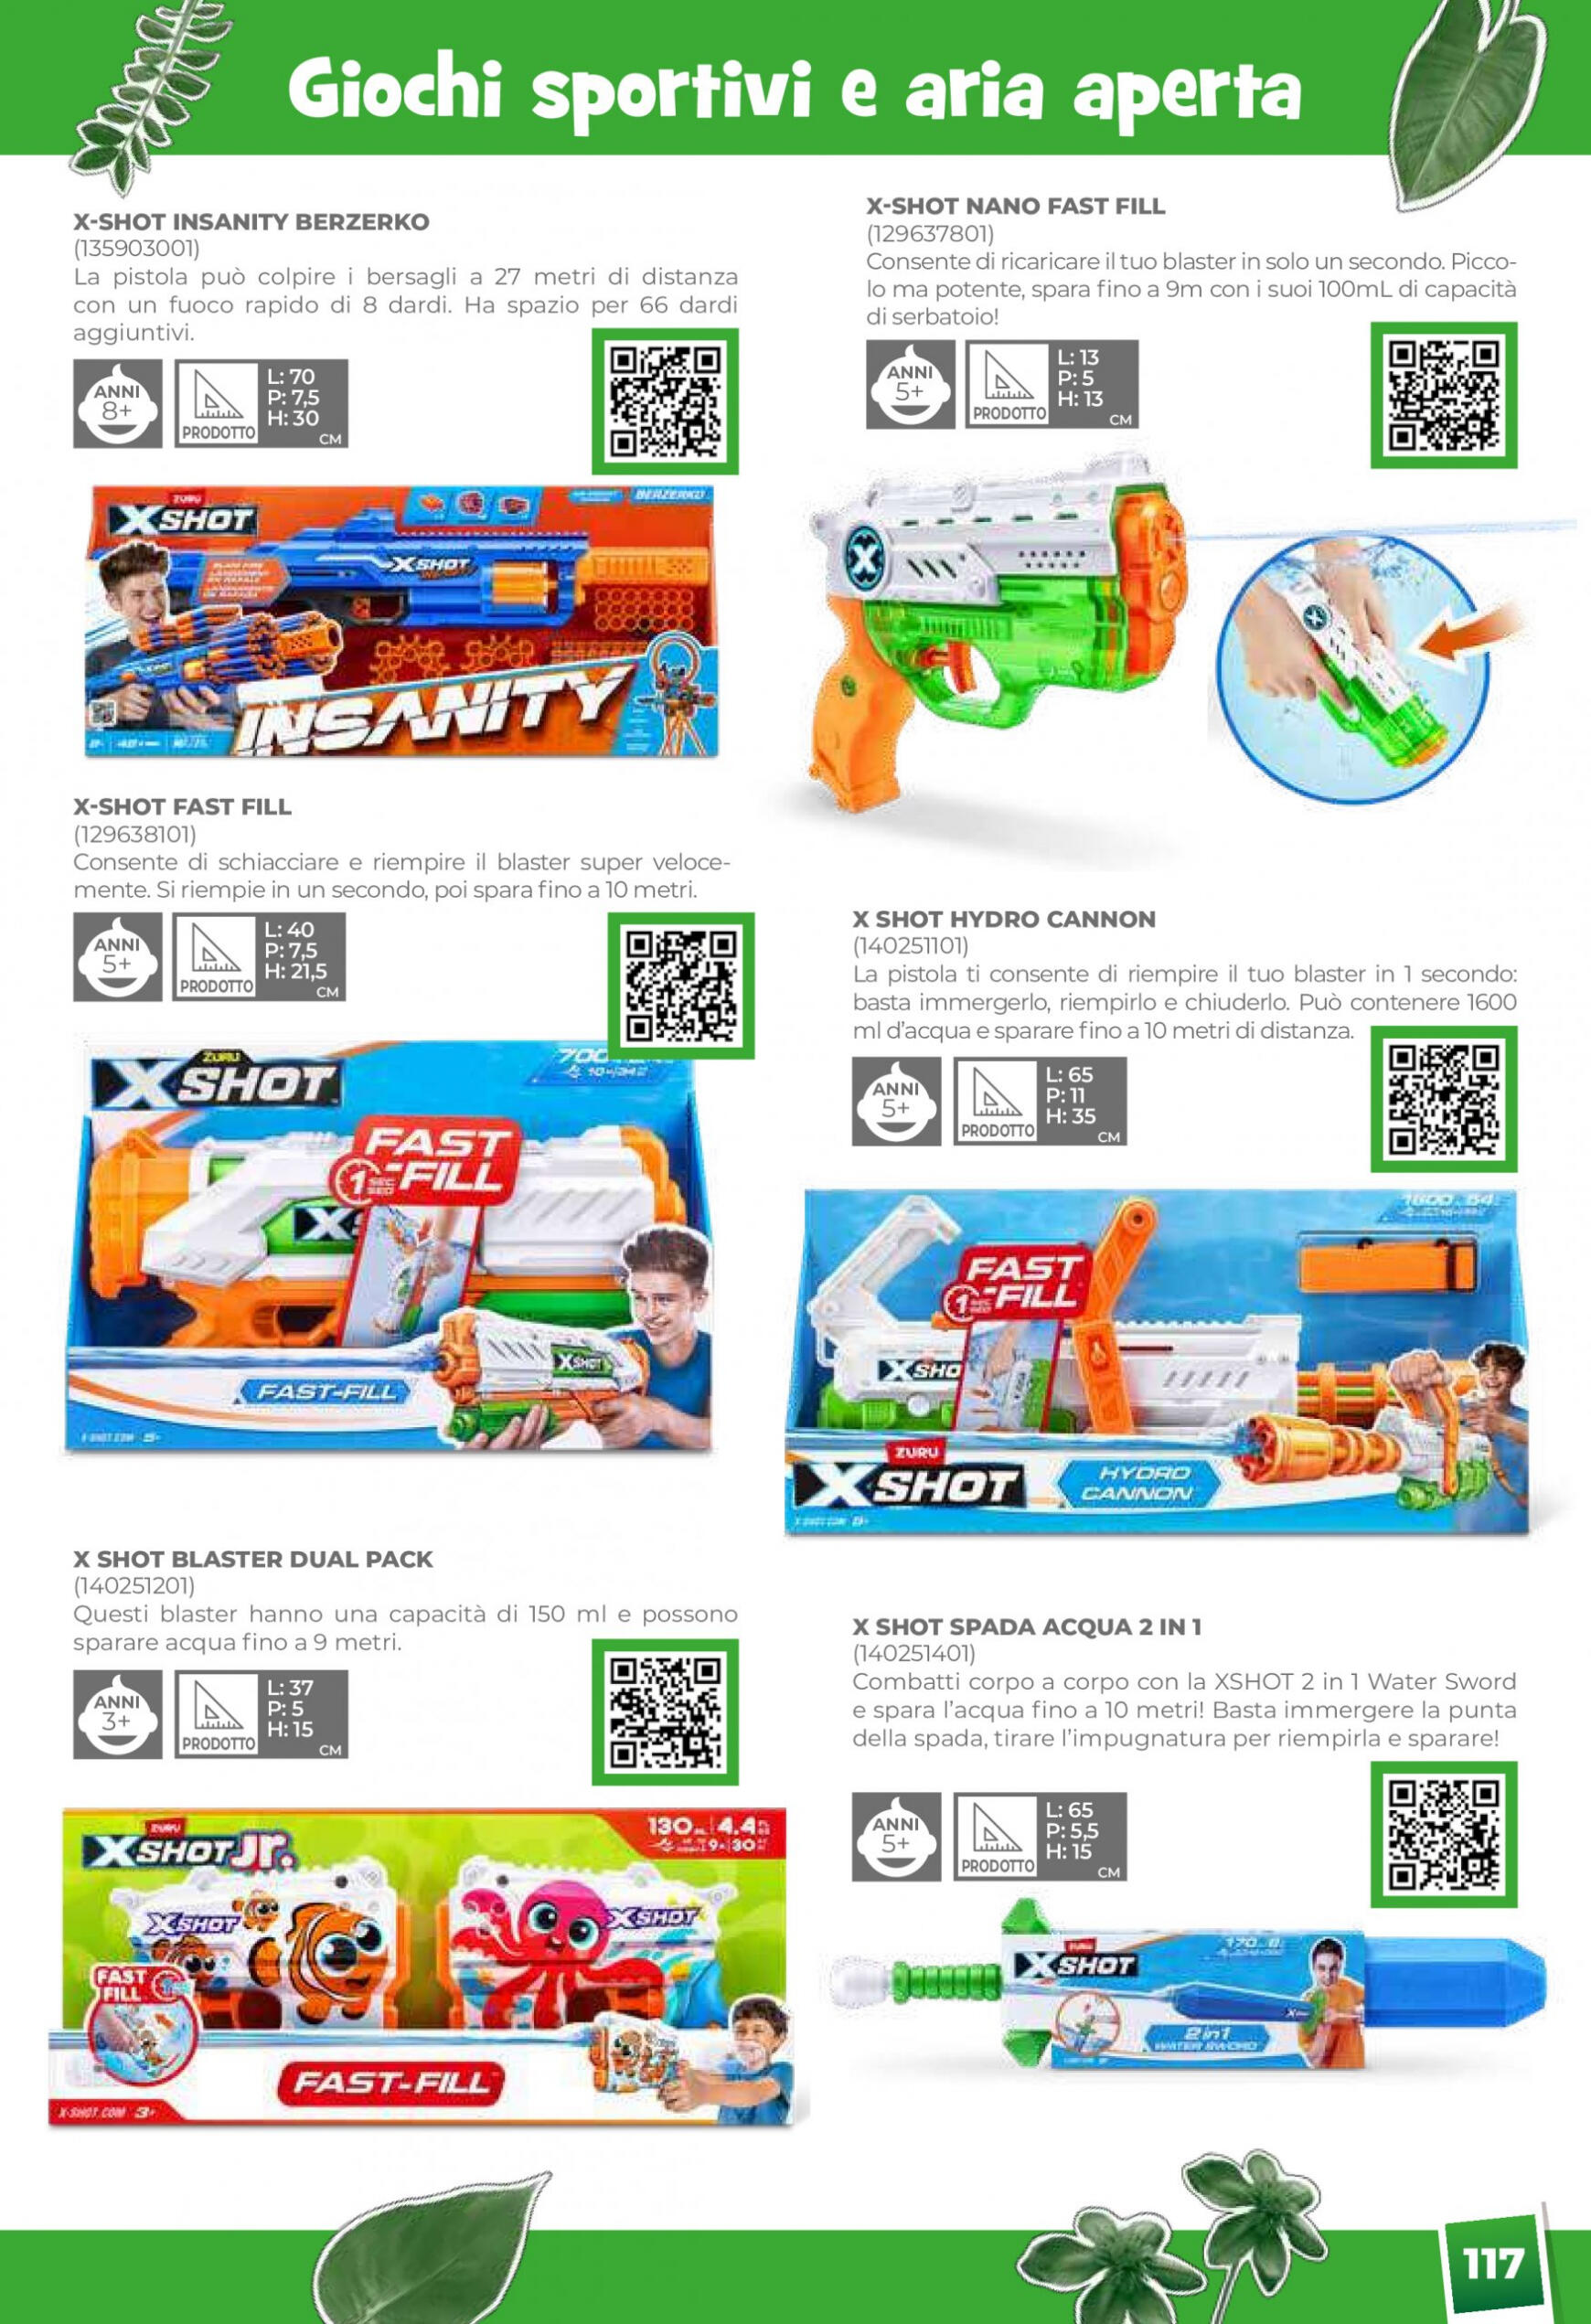 toys-center - Nuovo volantino Toys Center 01.05. - 31.12. - page: 119